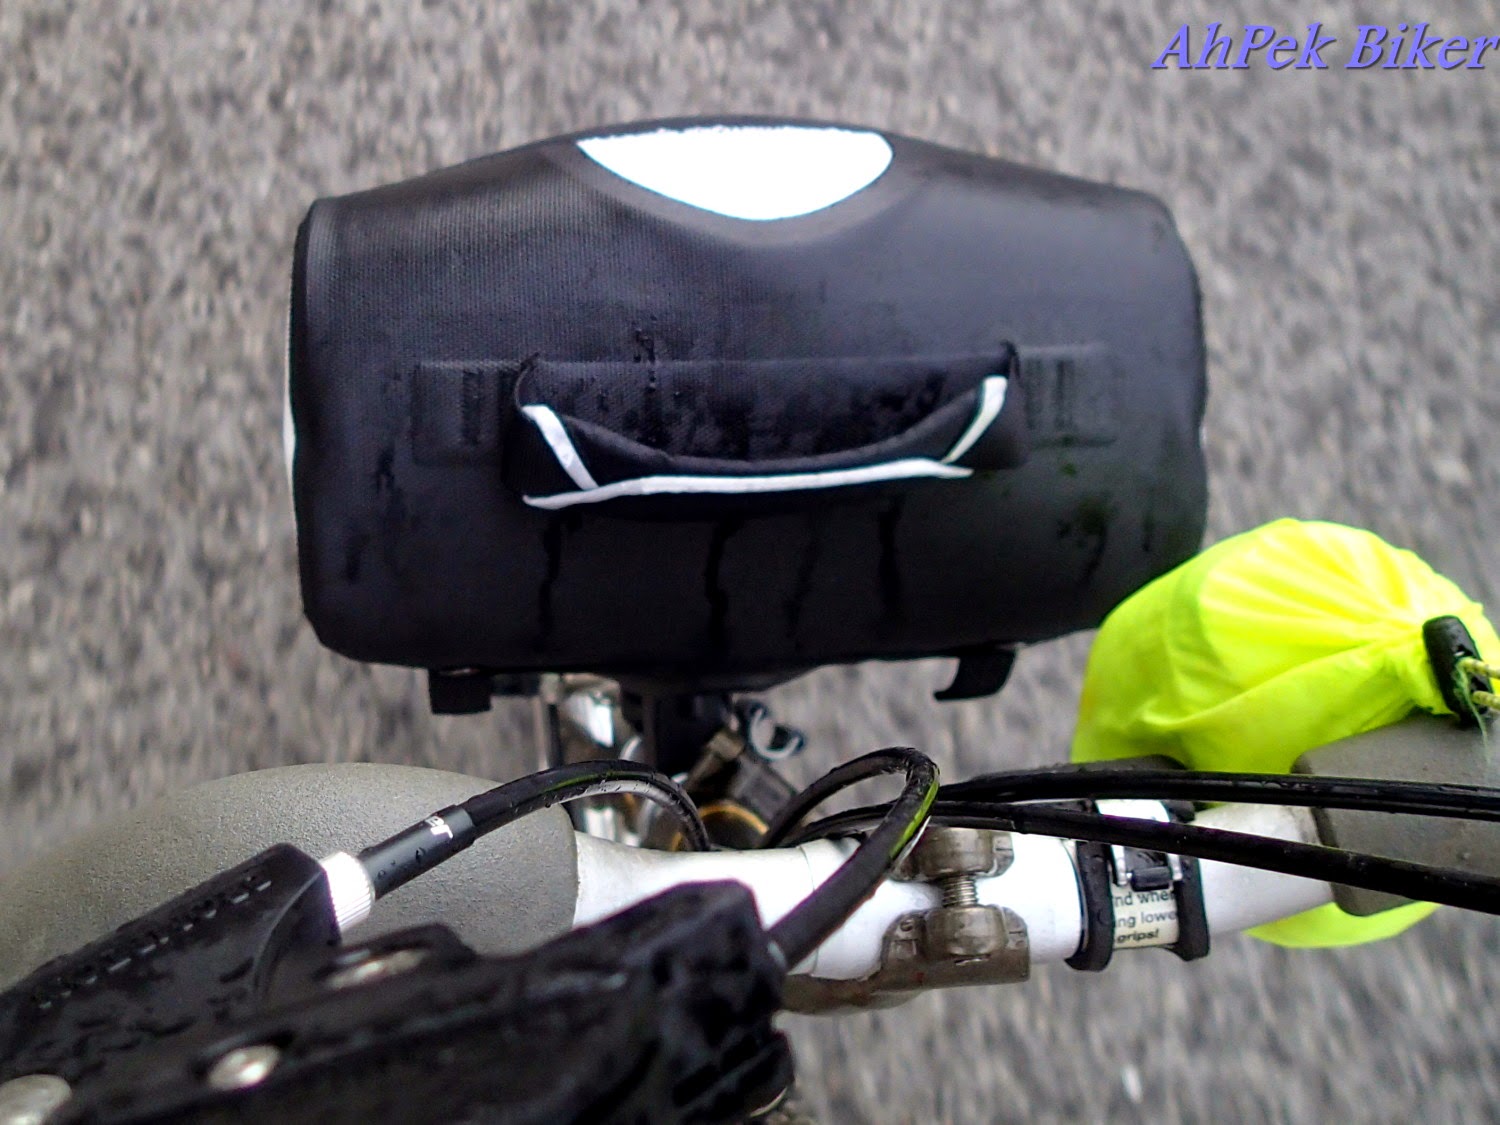 AhPek Biker - Old Dog Rides Again: Brompton Accessories #14 - Mini